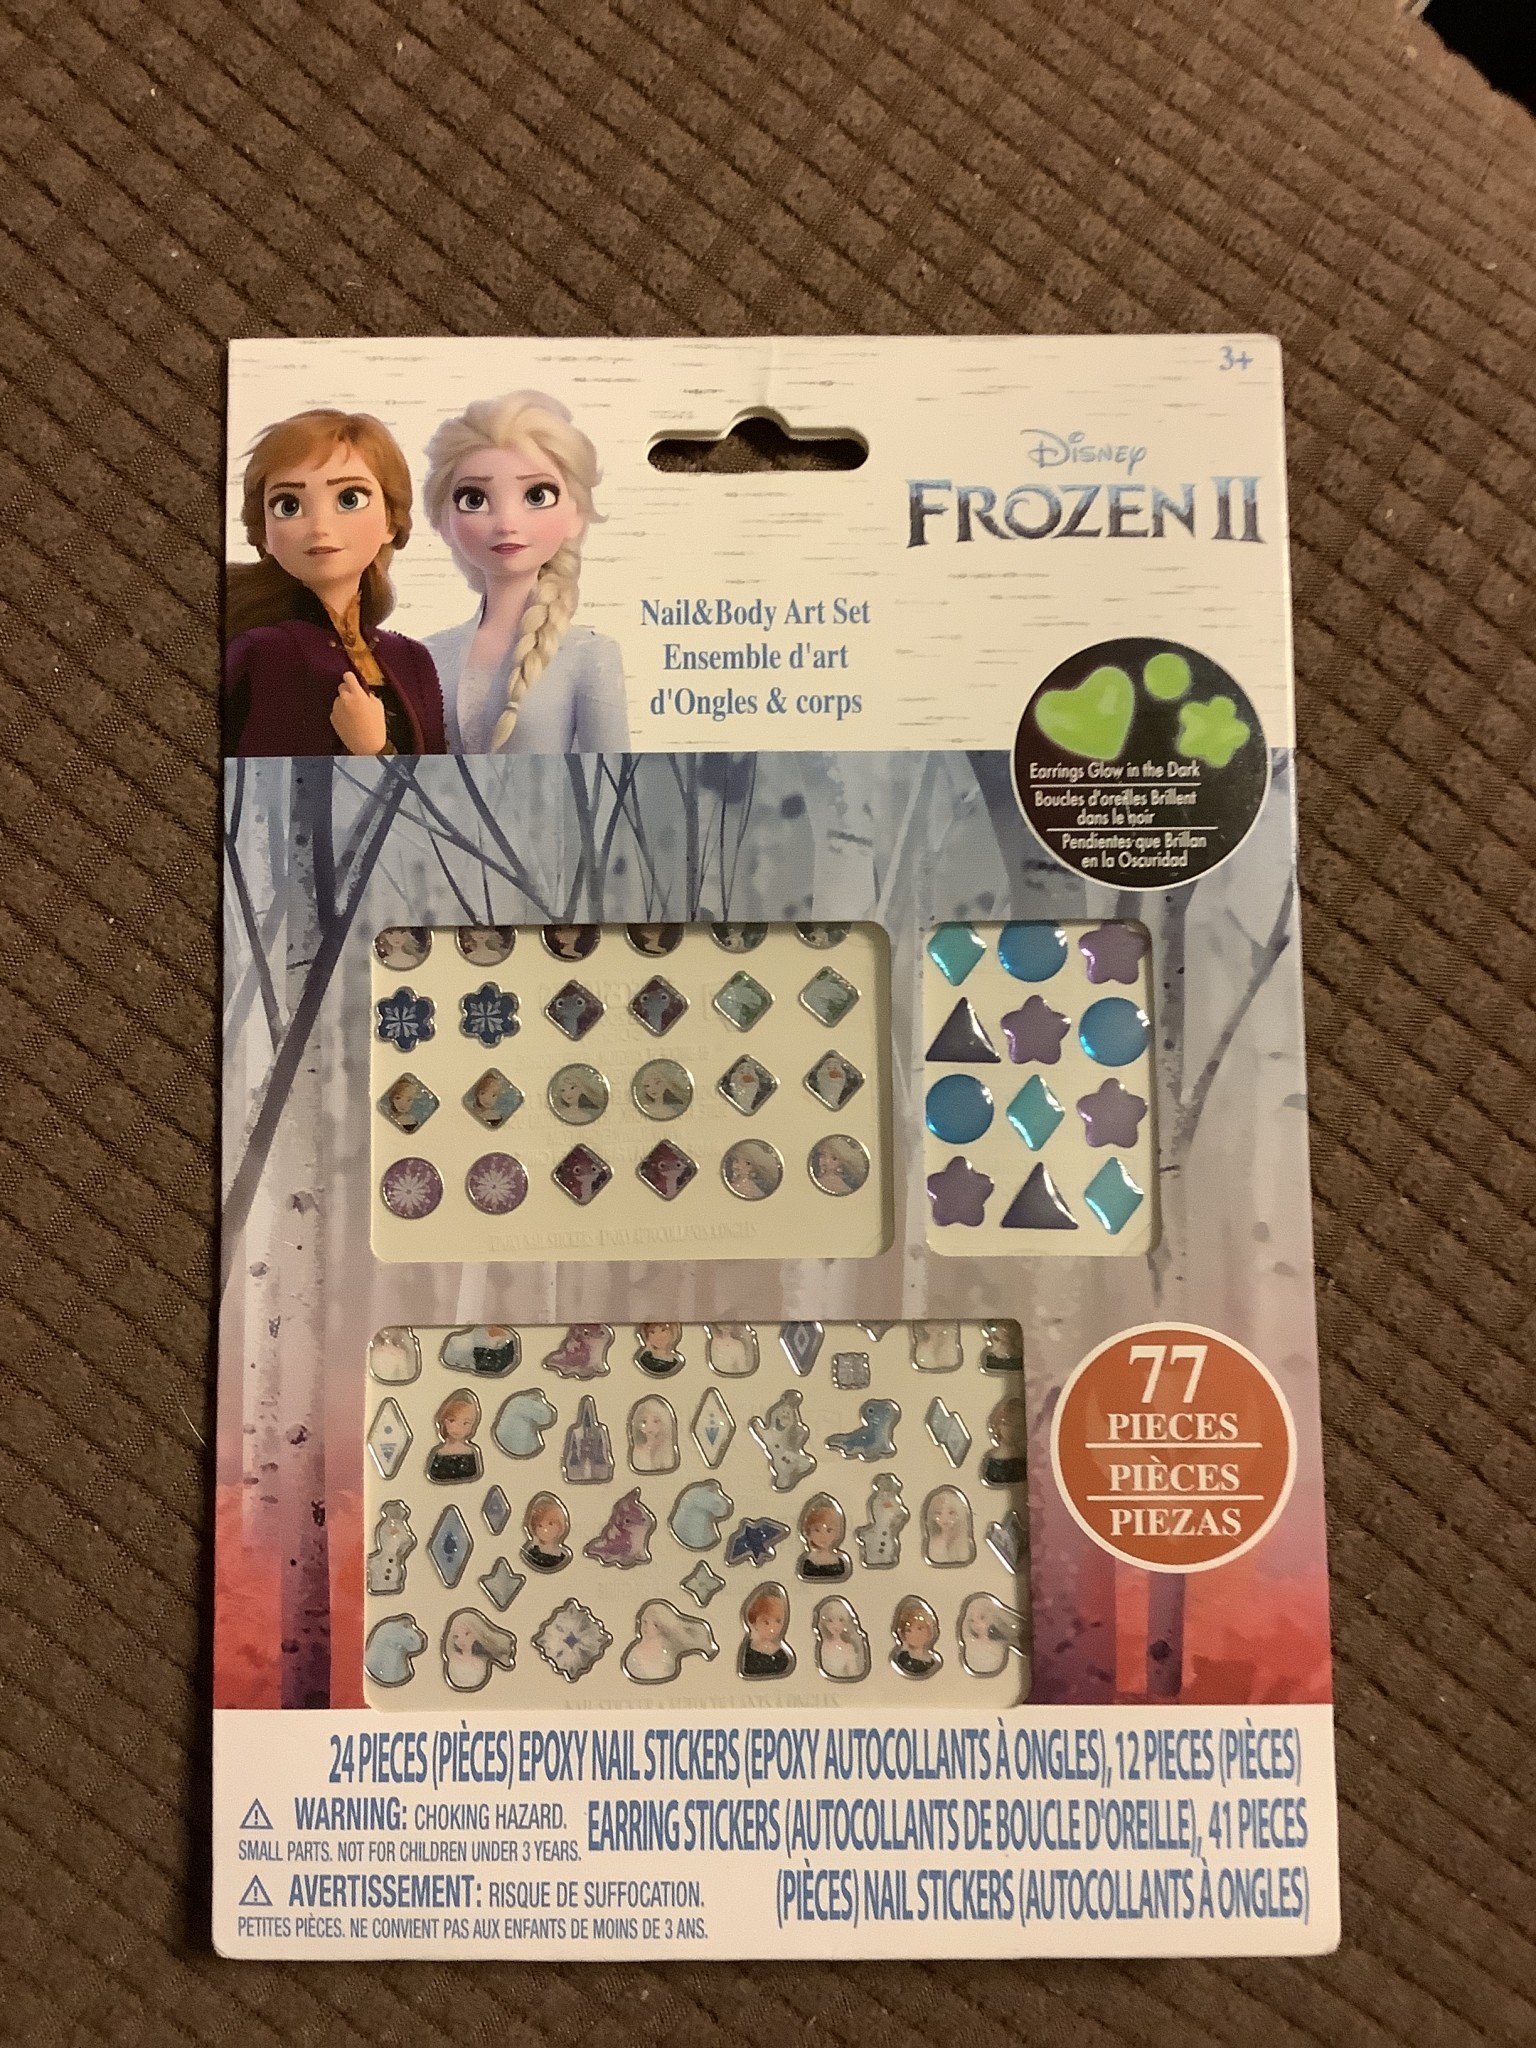 Disney Set de Stickers Frozen